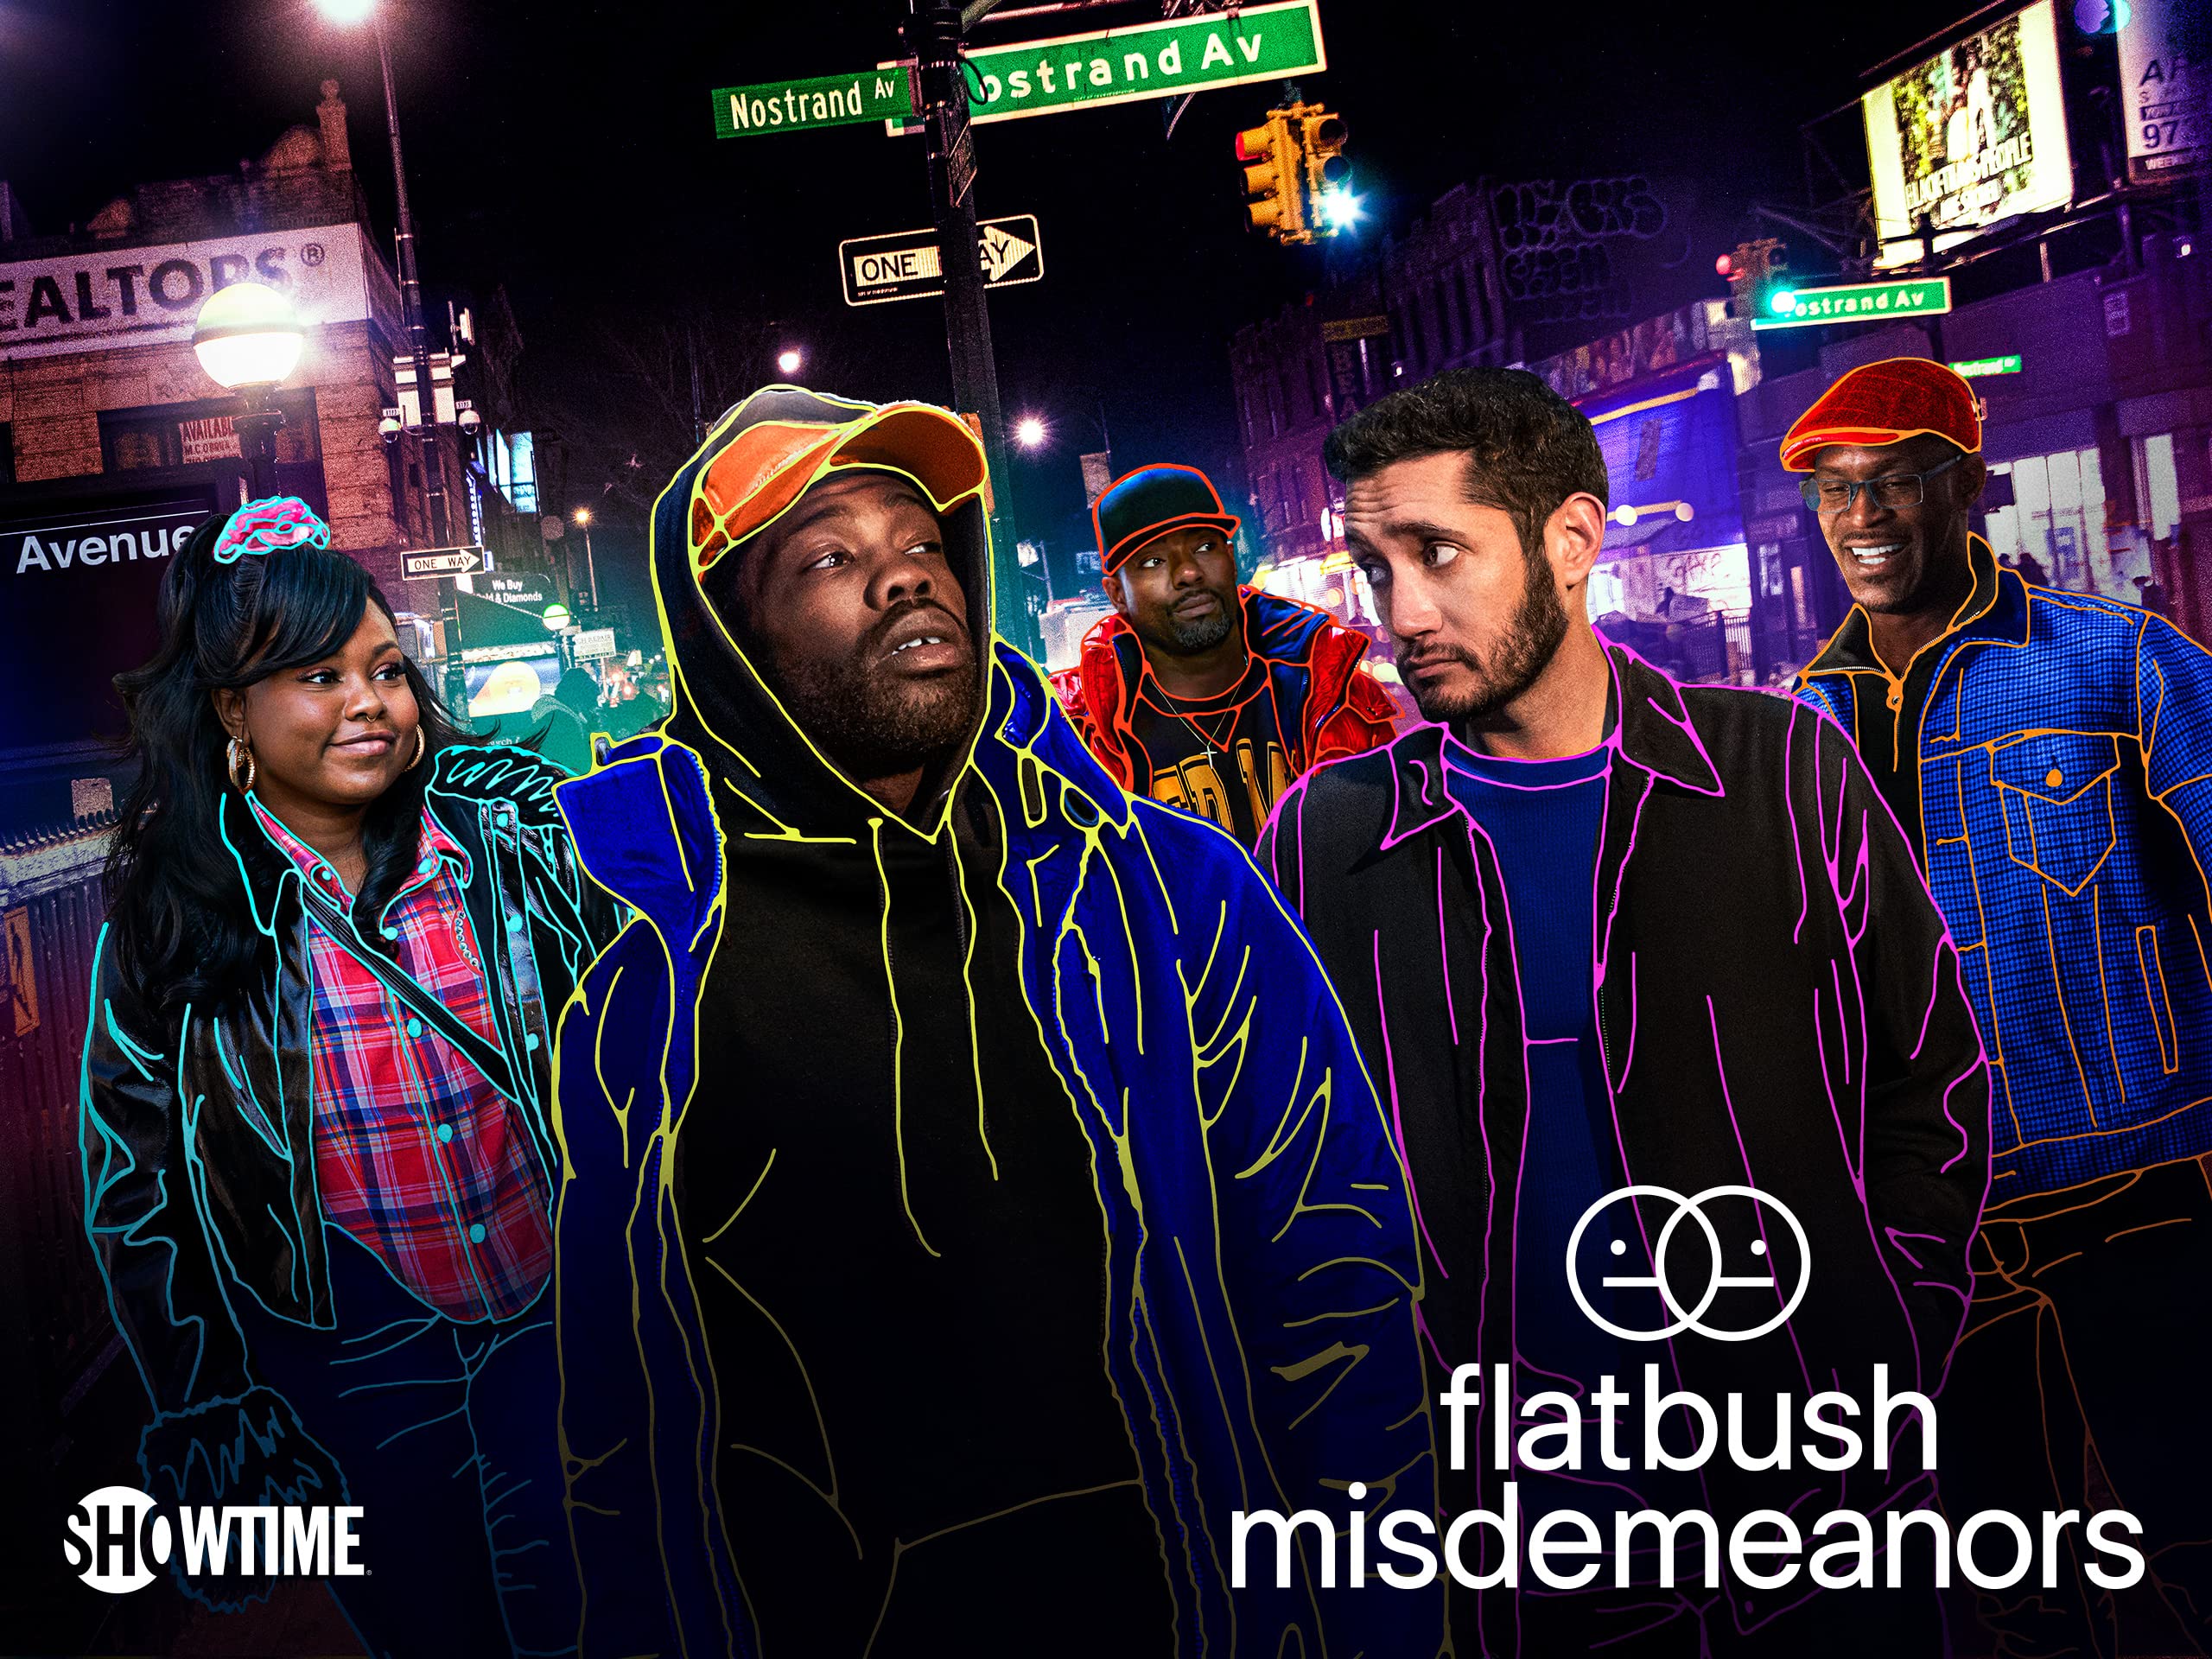 Flatbush Misdemeanors on Showtime